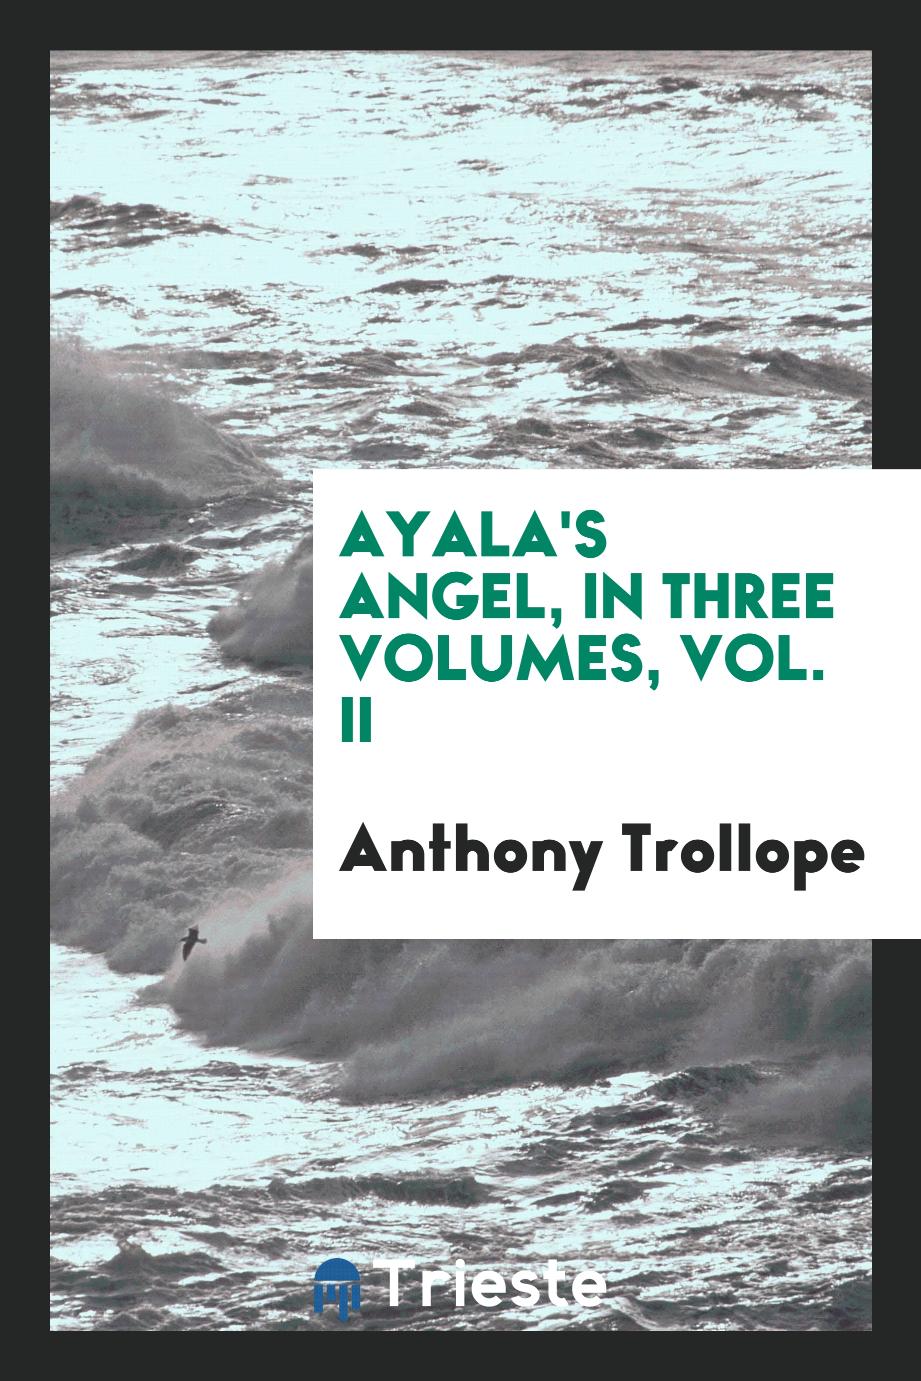 Ayala's angel, in three volumes, Vol. II